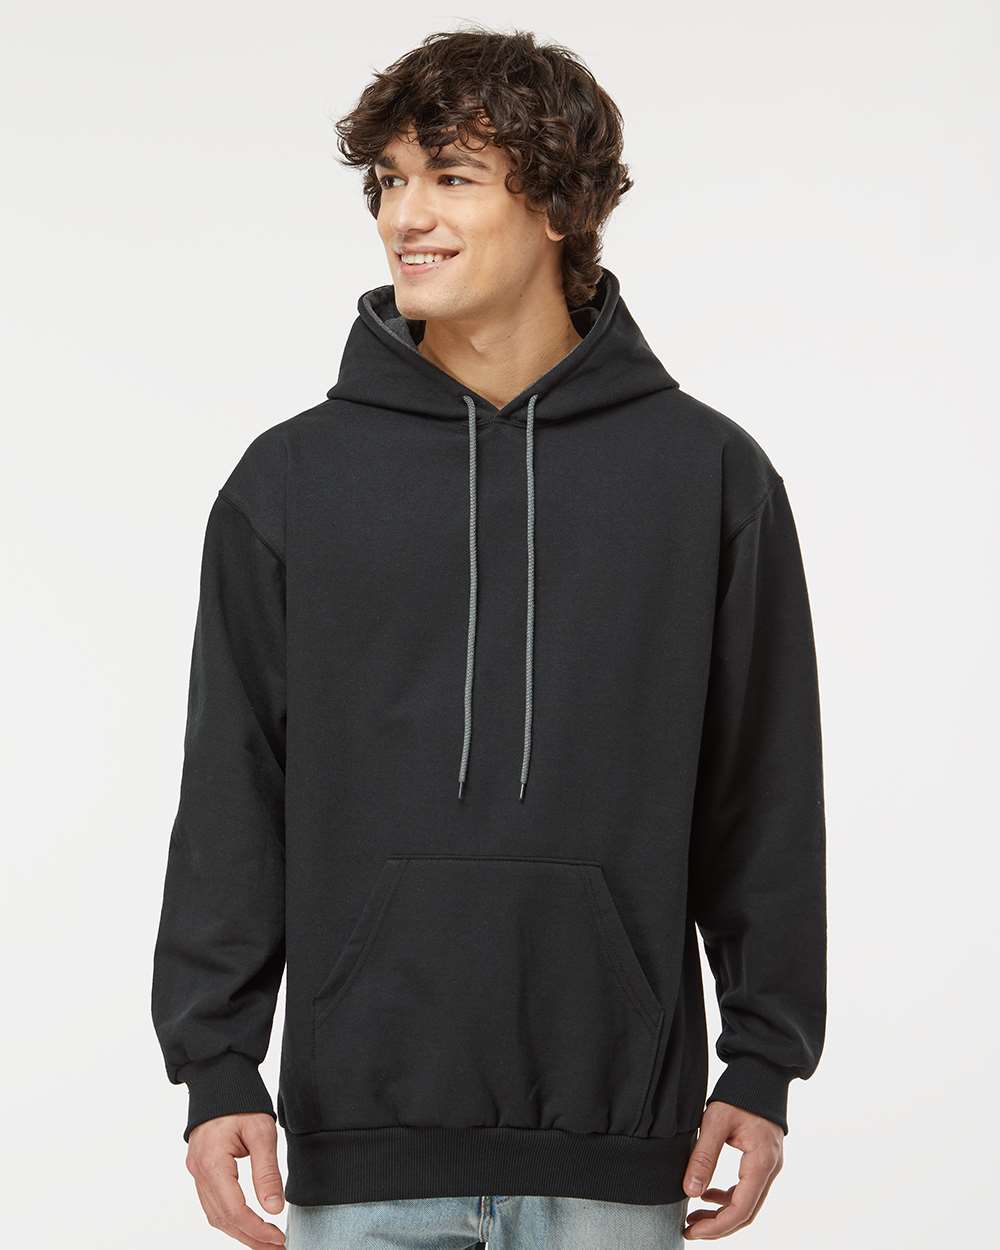 King Fashion Two-Tone Hooded Sweatshirt KF9041 #colormdl_Black/ Charcoal